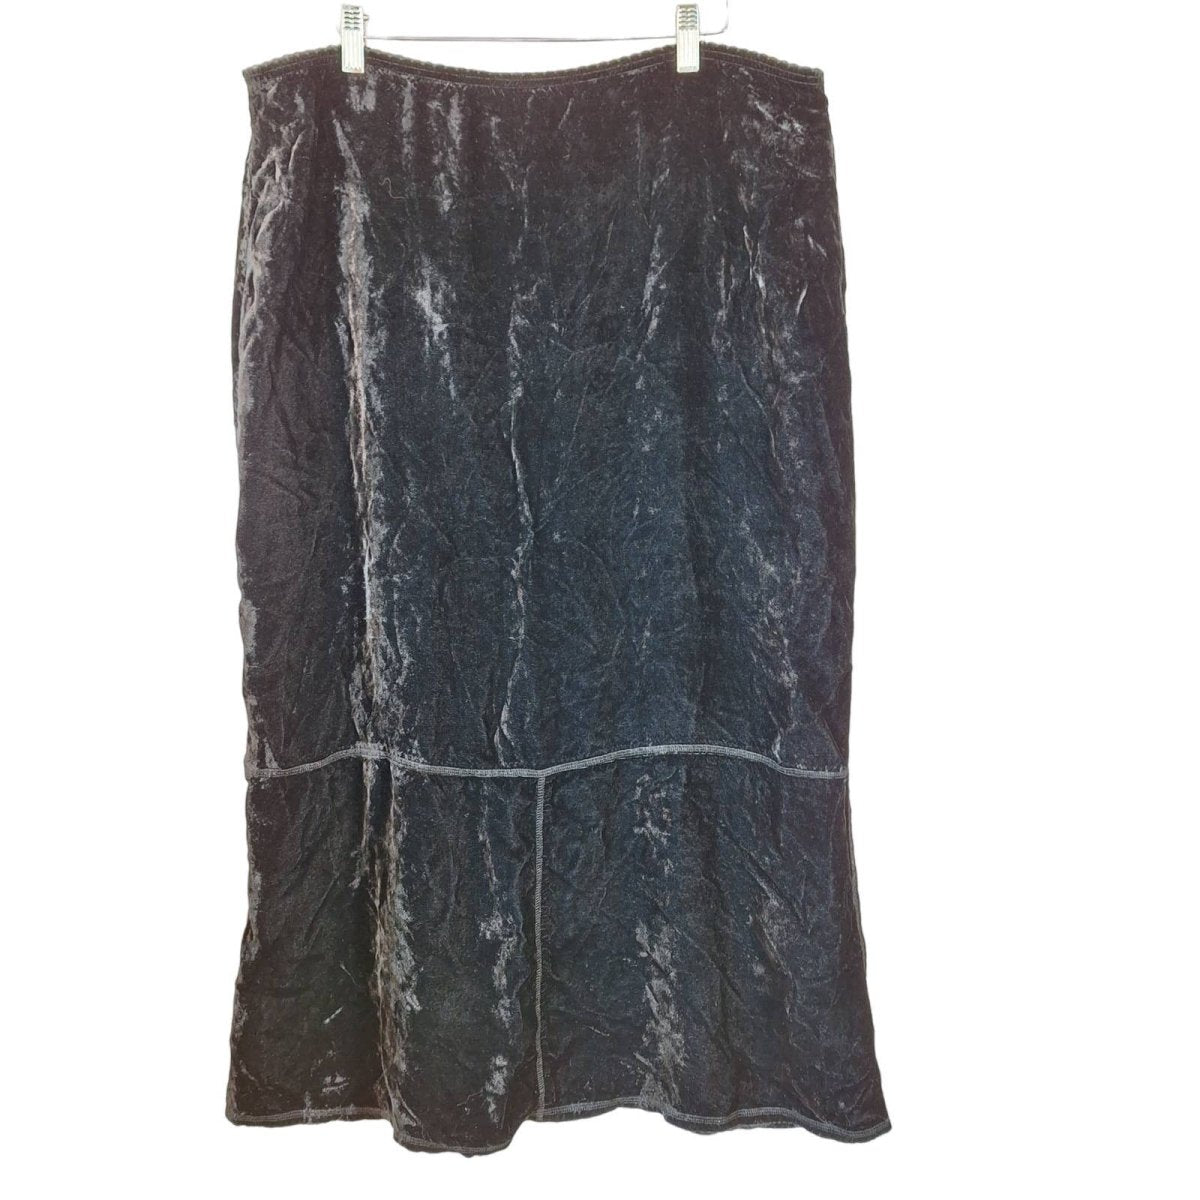 Vintage 90s/Y2K Black Velvet Midi/Maxi Skirt Women's Size 18 Waist 40" - themallvintage The Mall Vintage